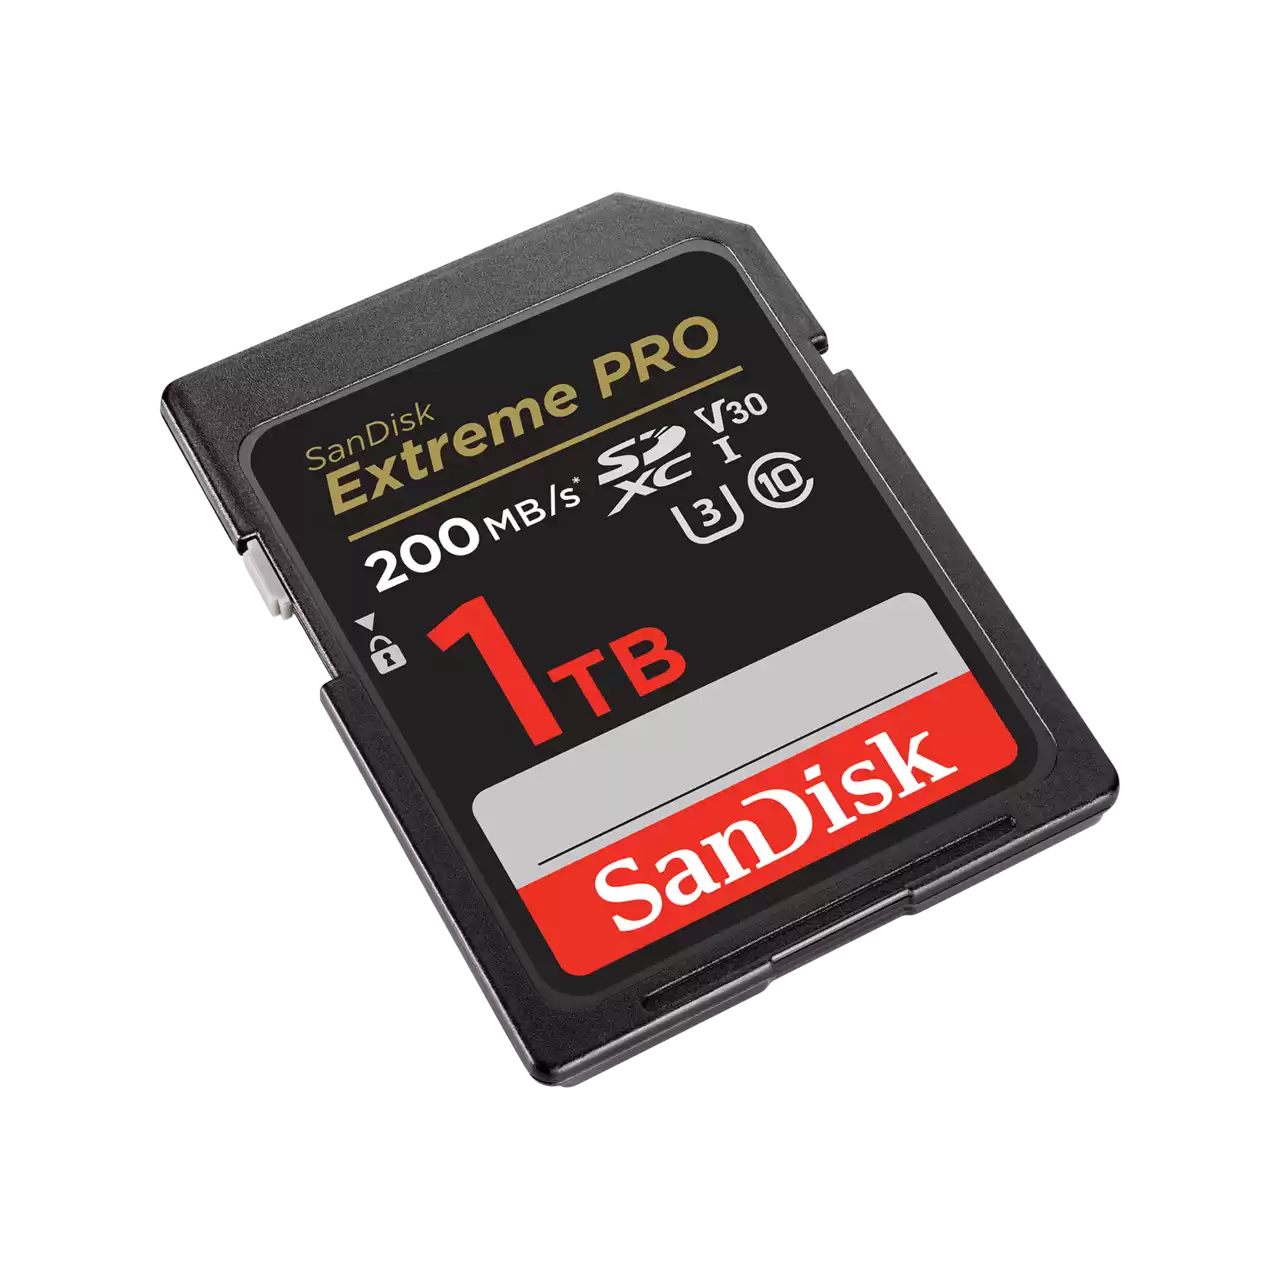 SanDisk 1TB 200mb/sn Extreme Pro SD Hafıza Kartı - Thumbnail